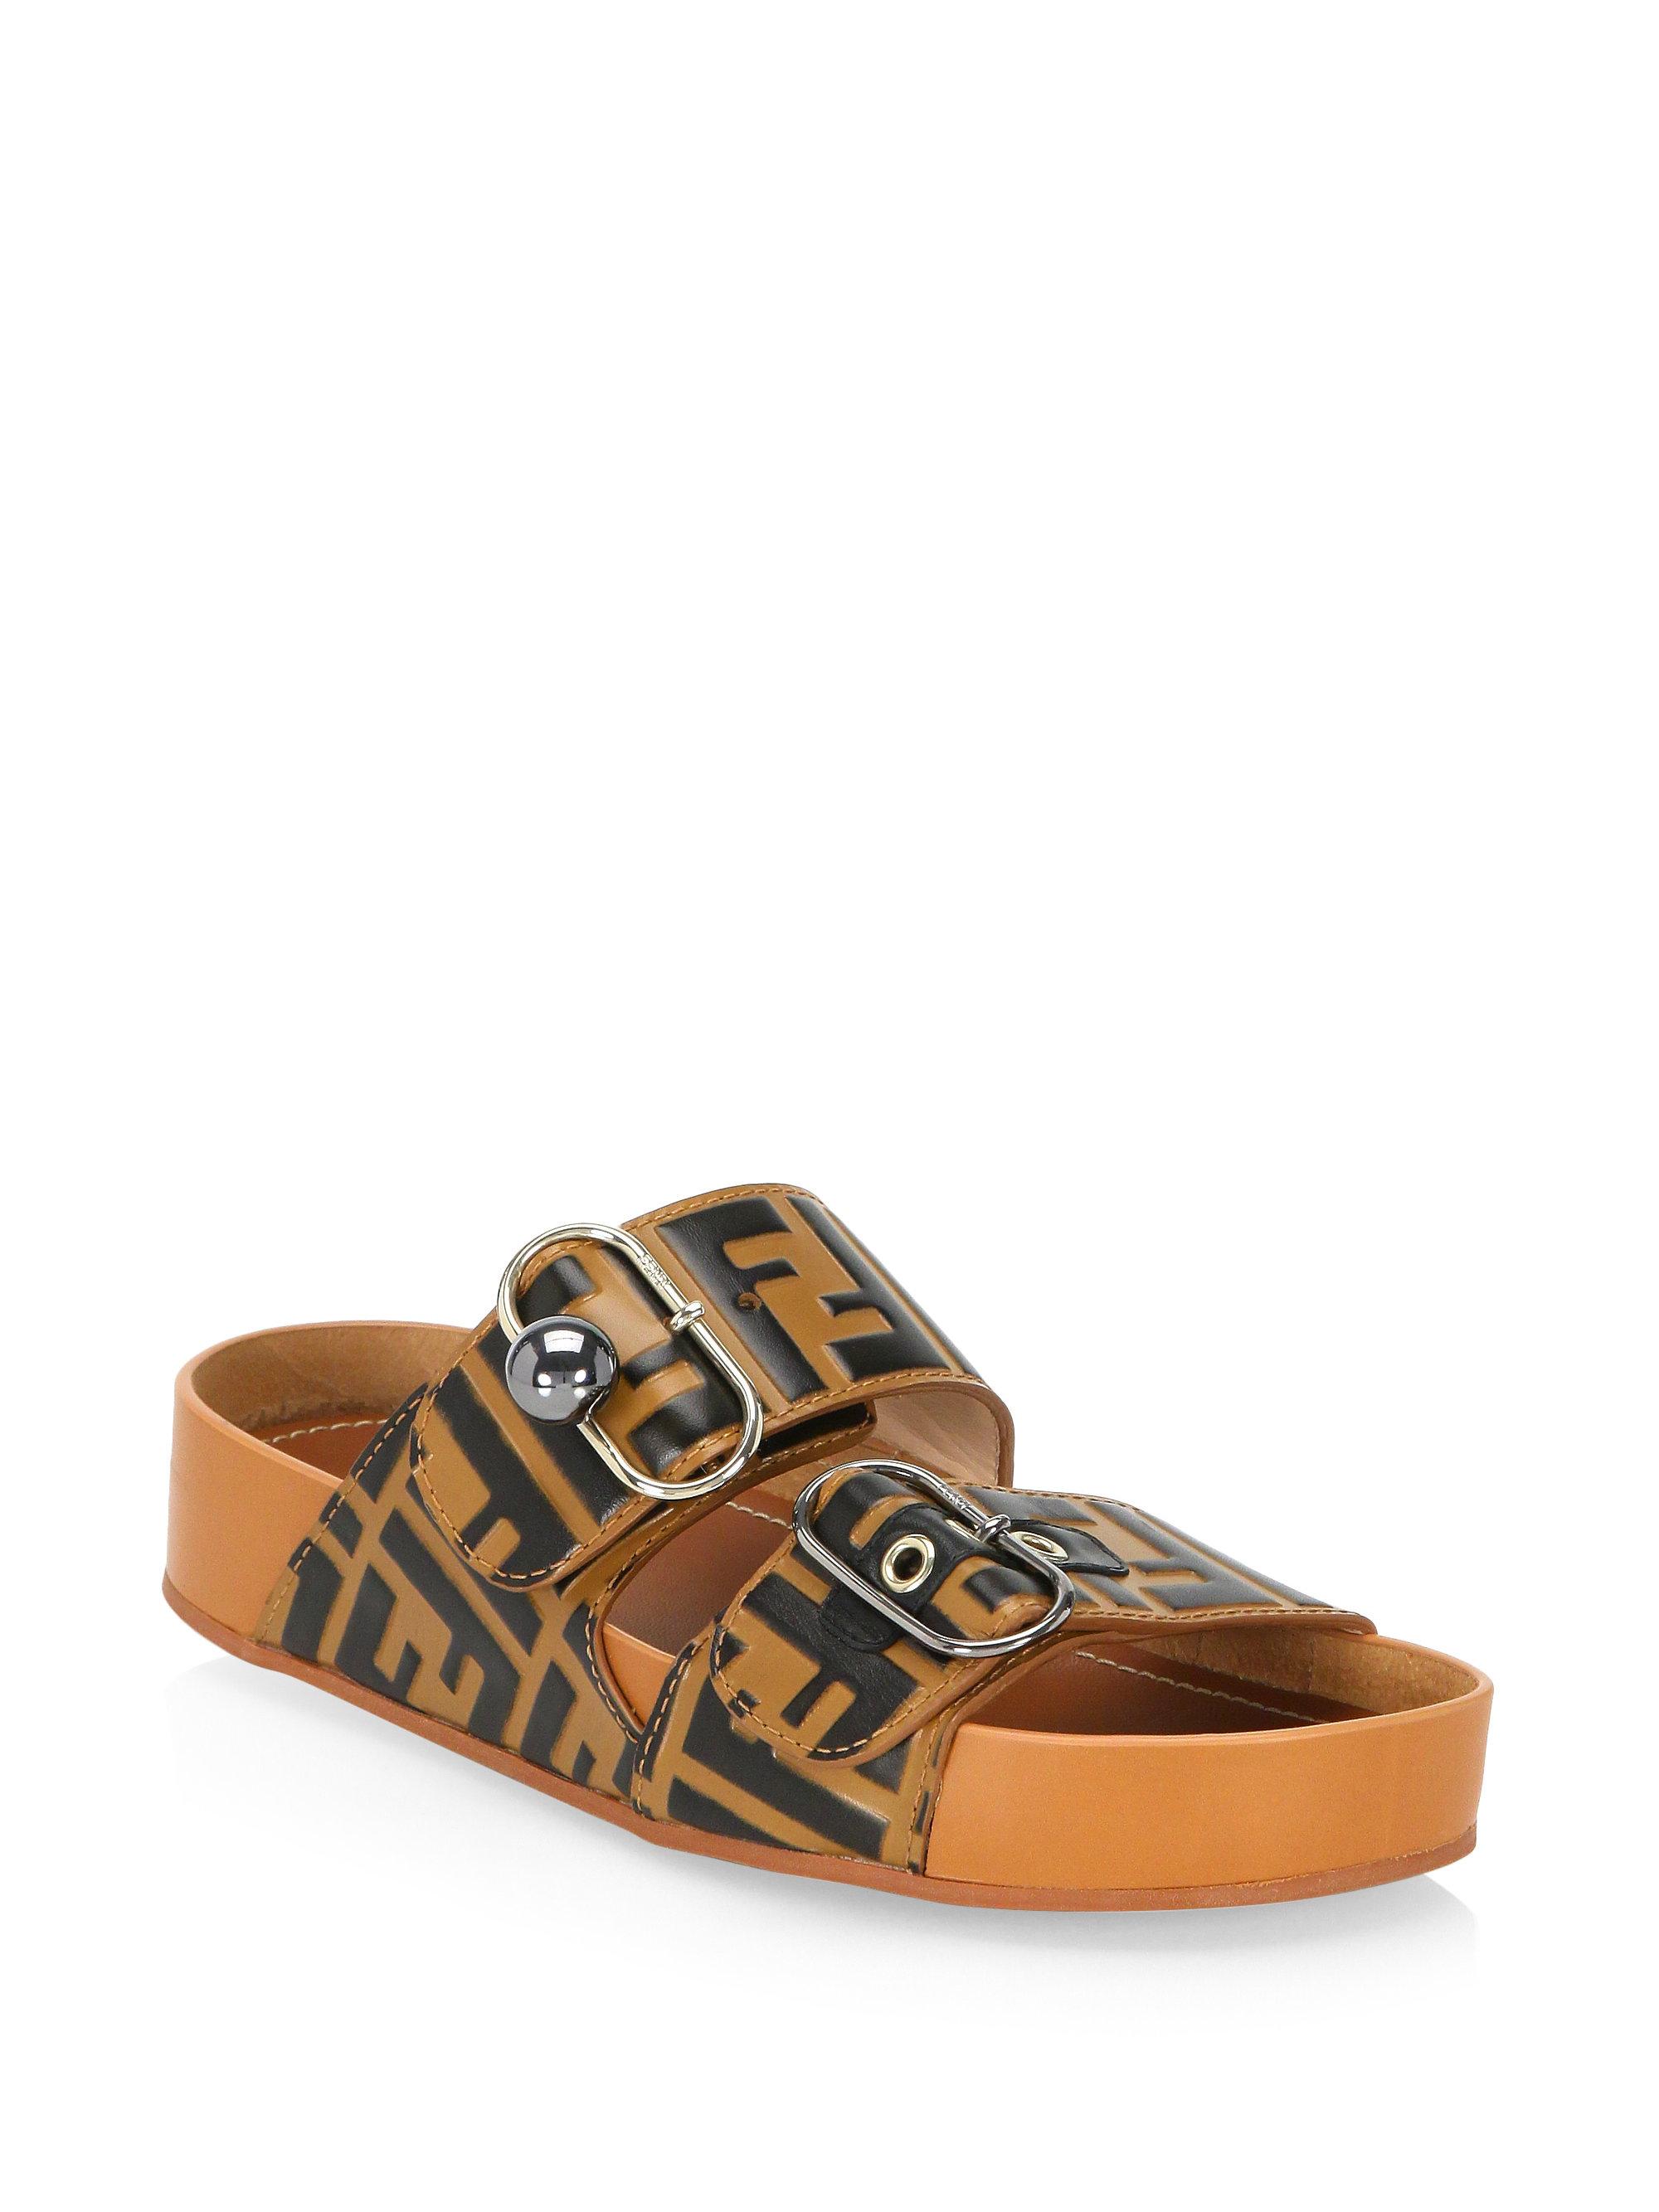 Fendi Leather Logo Slip-on Sandals in Brown - Lyst